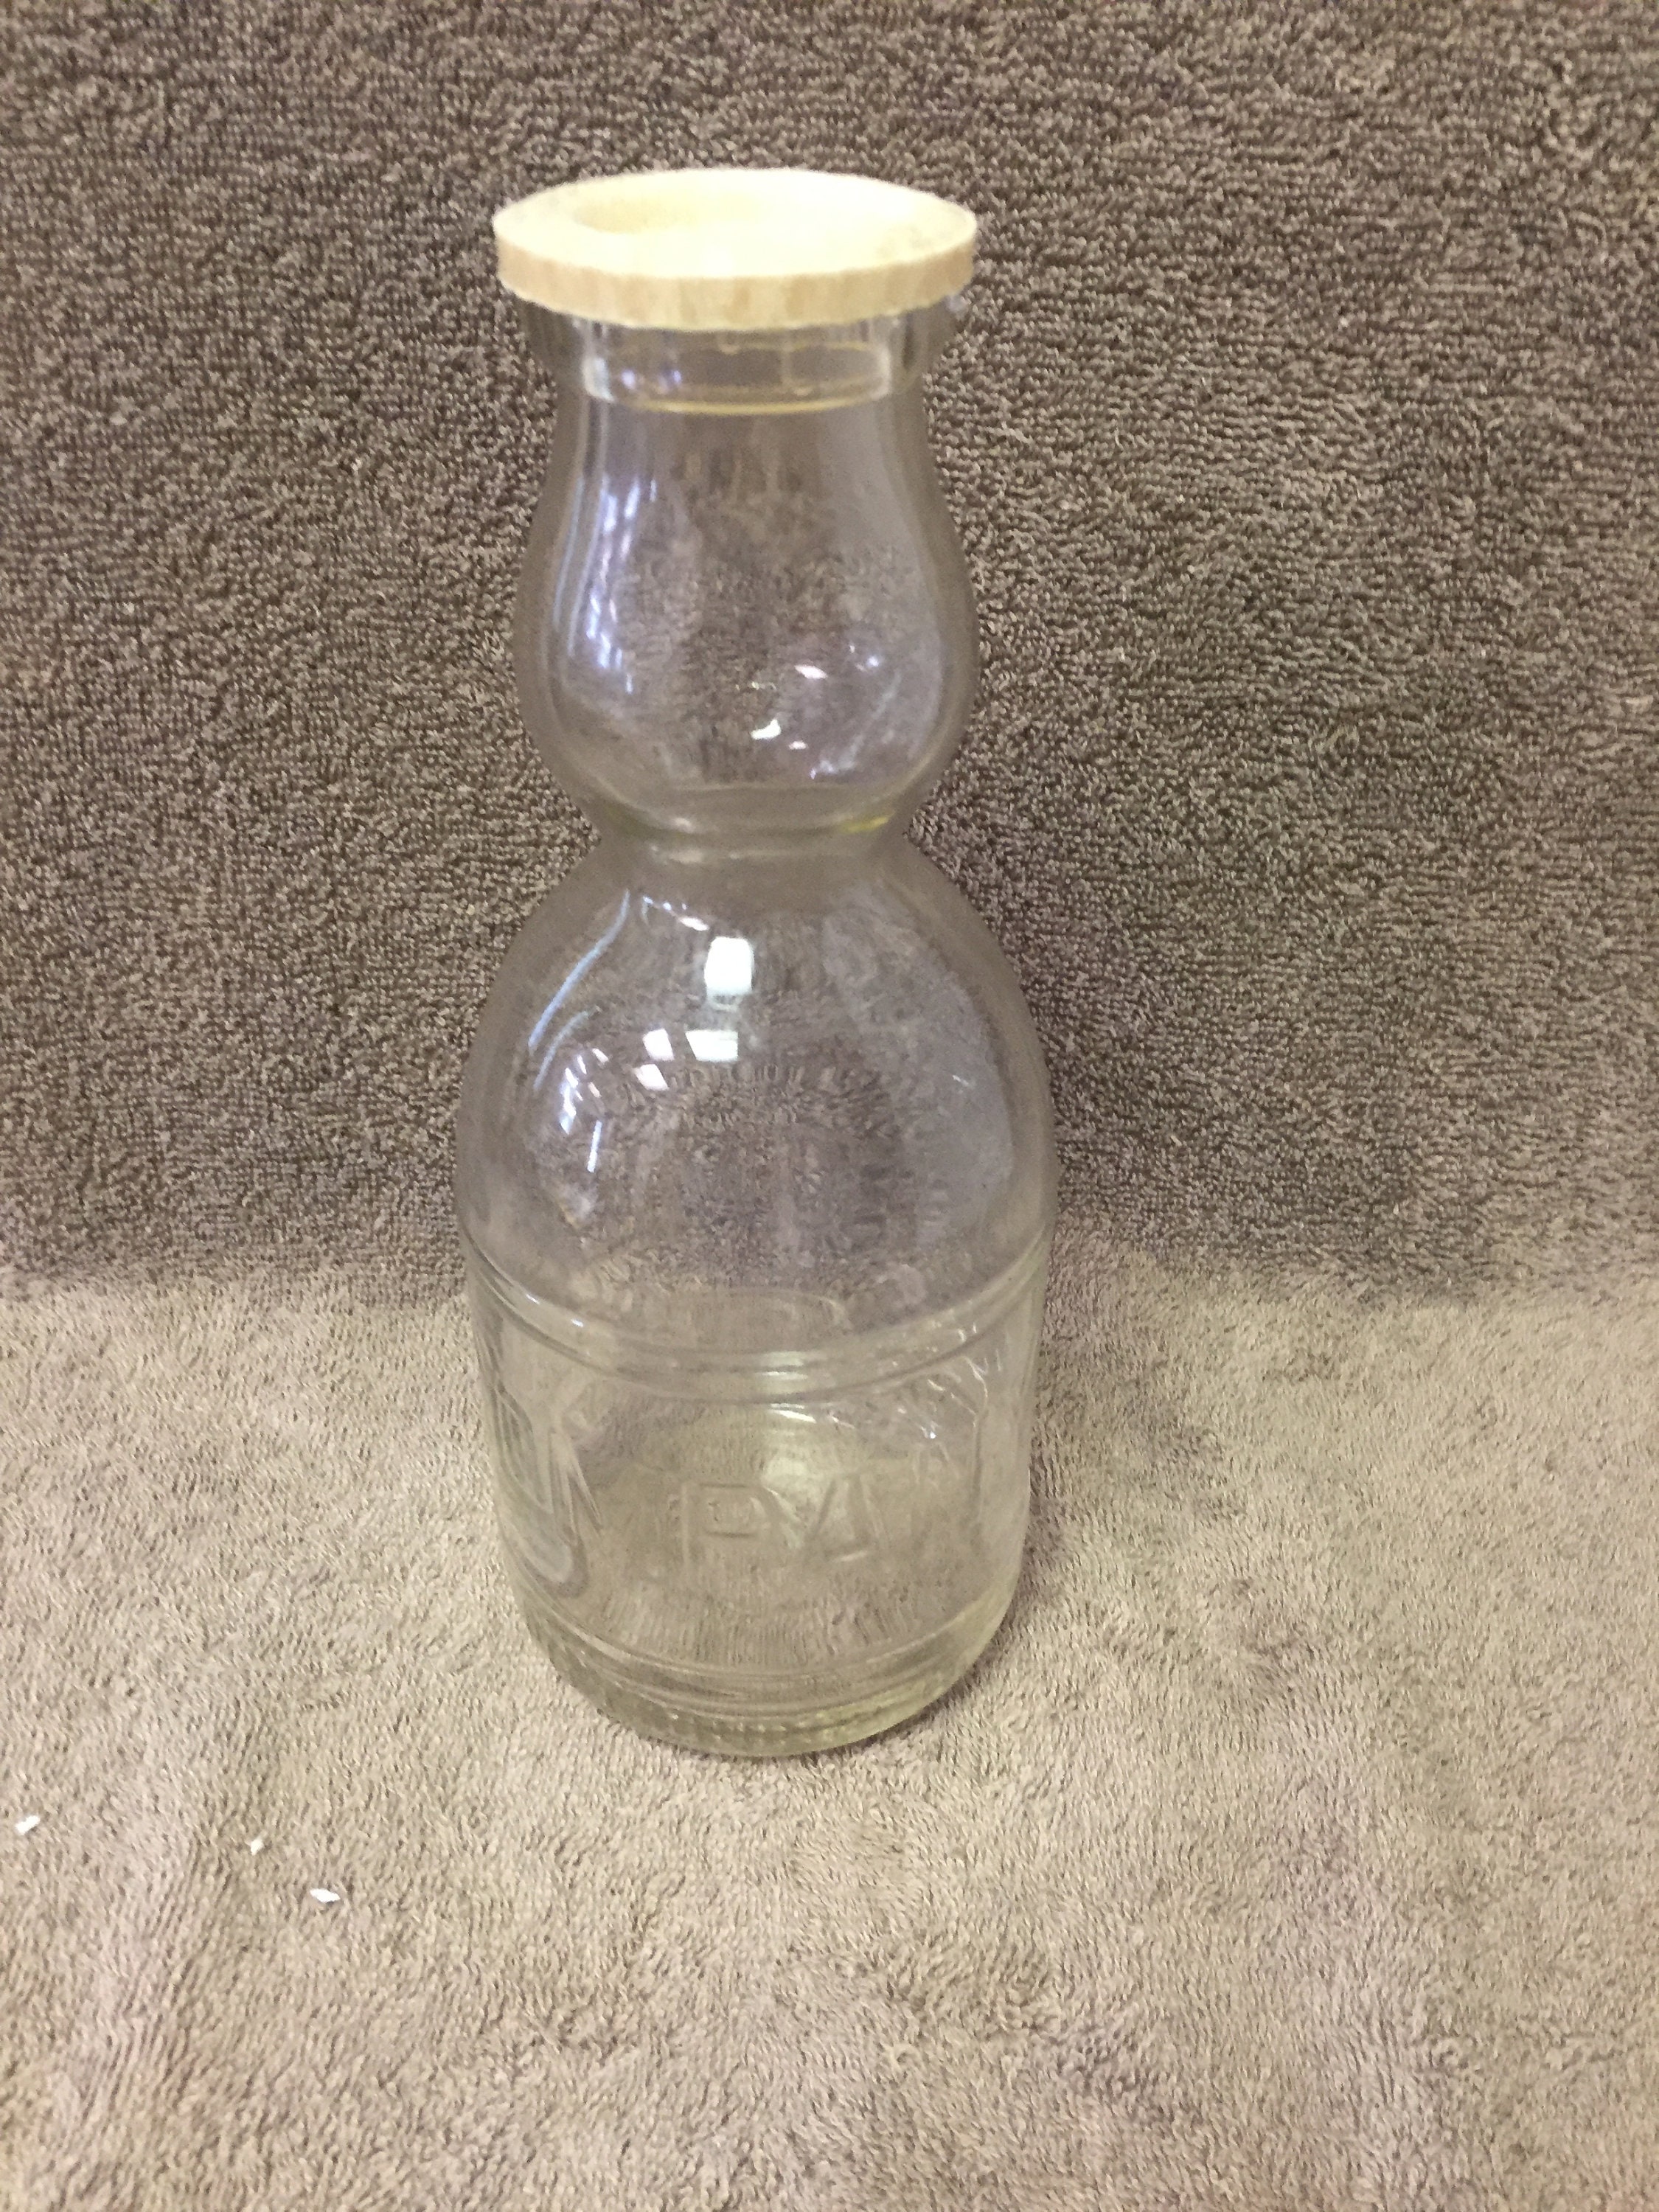 Vintage Bottle : Calder Dairy Clear Glass Orange Graphics Milk Container  Farm Fresh Local With Plastic Bottle Cap Carlton Michigan USA 